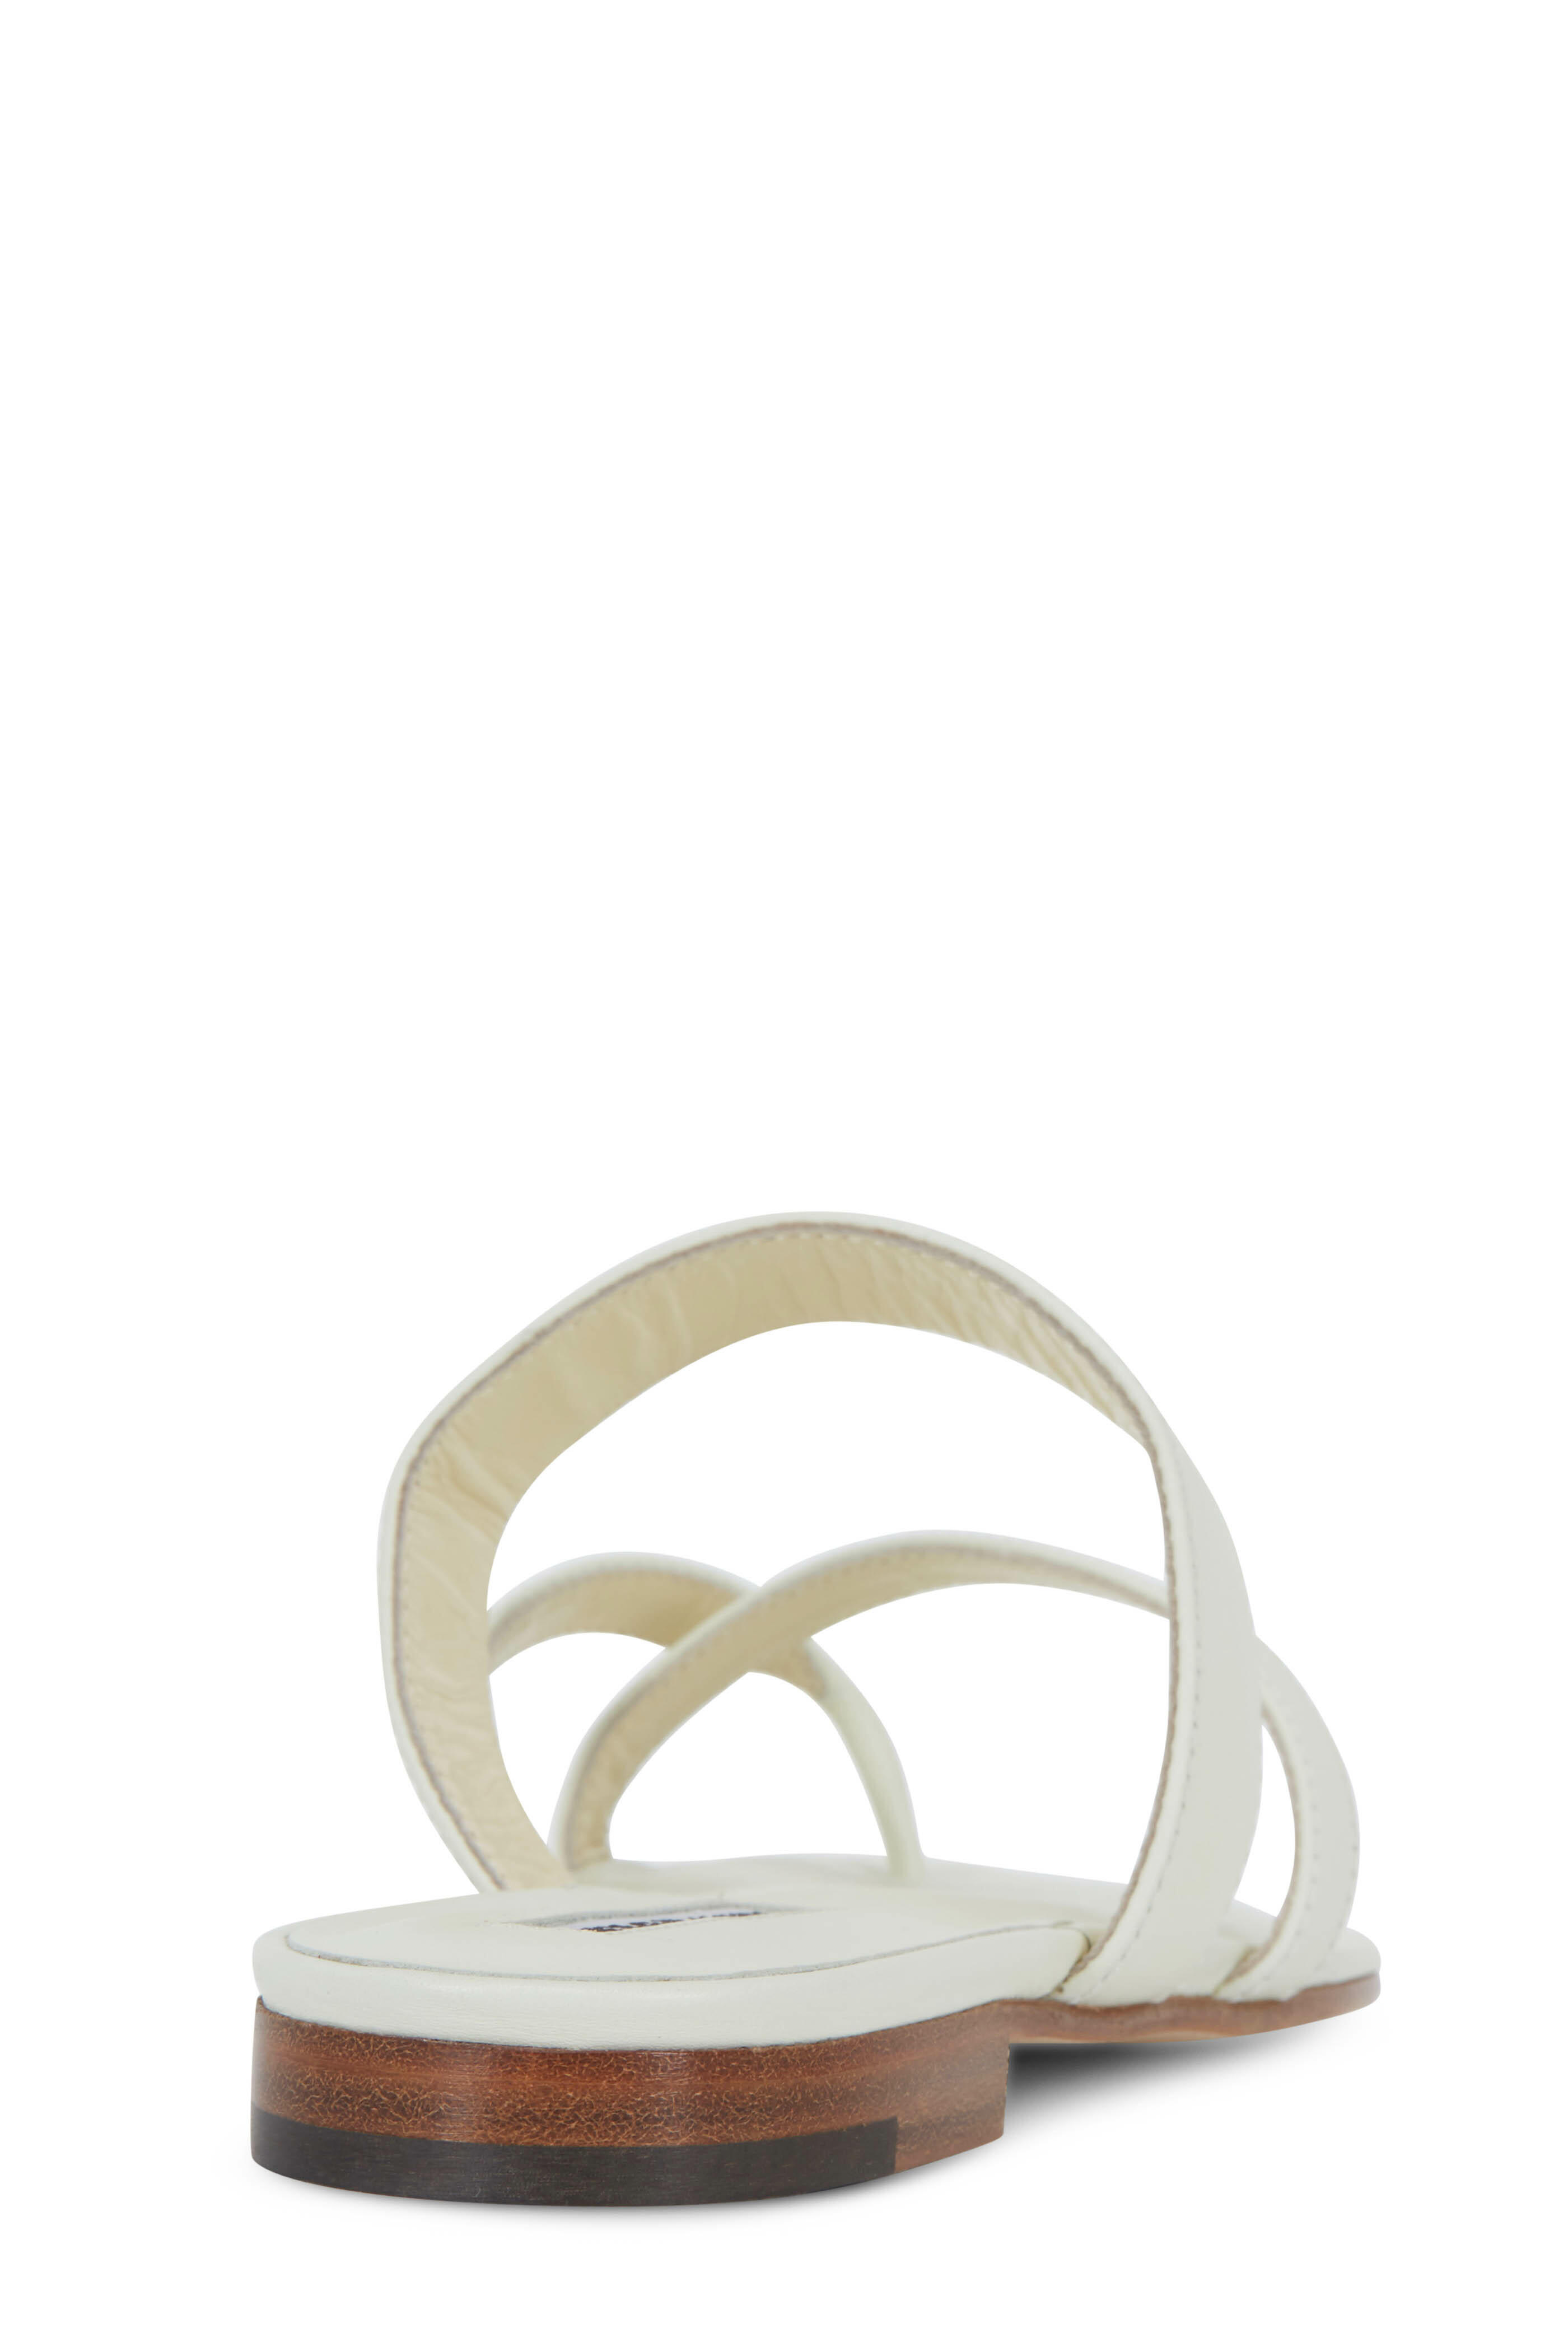 Manolo Blahnik - Susa White Leather Toe Ring Flat Sandal